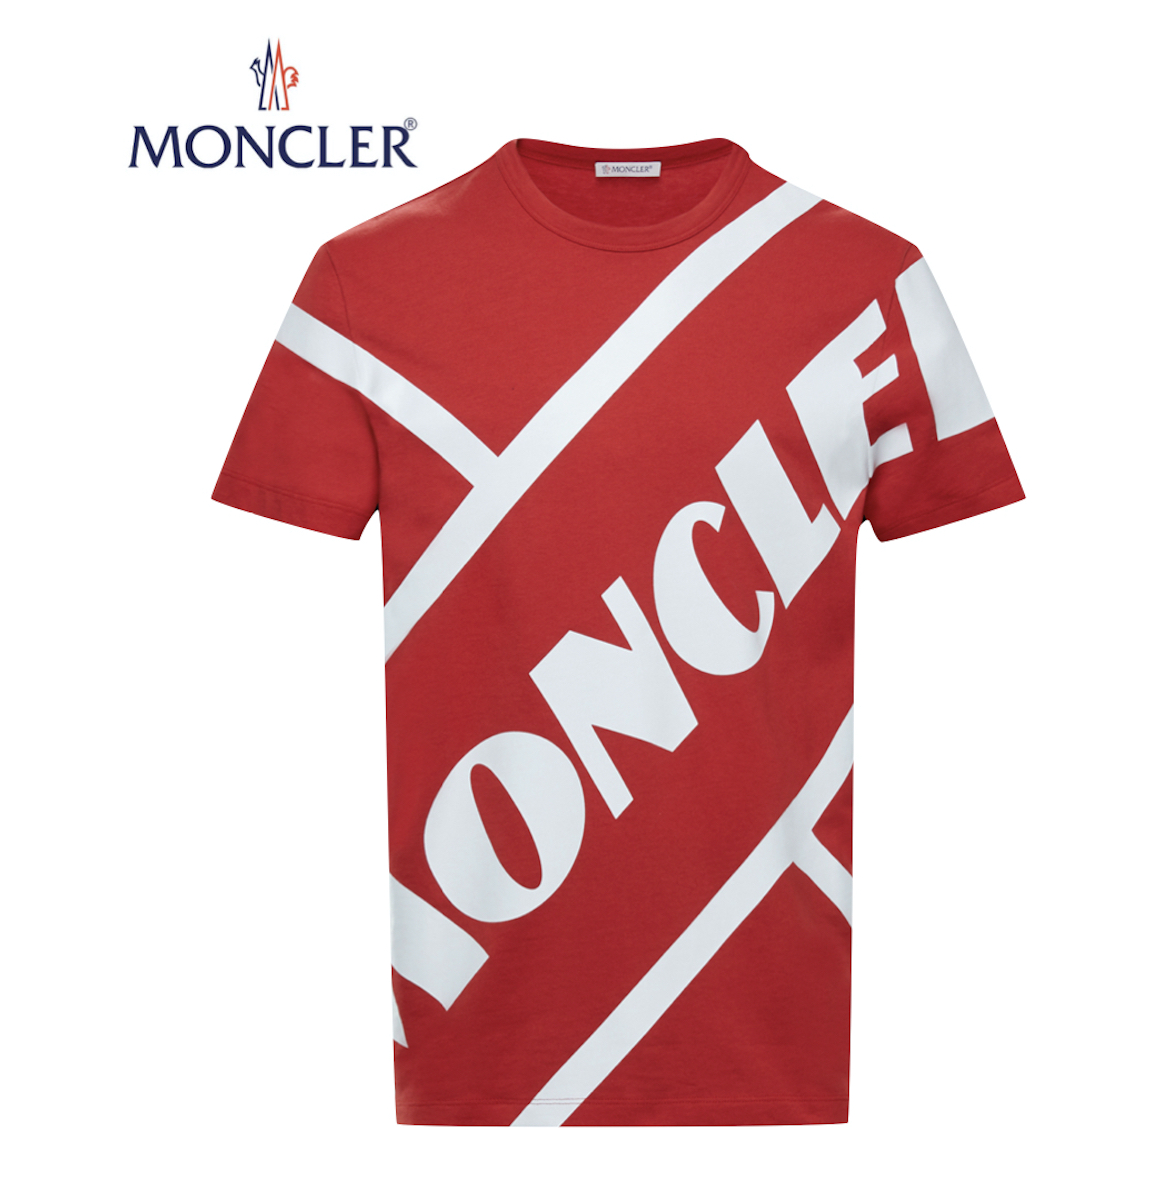 MONCLER T-shirt Red Mens 2020SS モンクレール Tシャツ レッド メンズ 2020年春夏